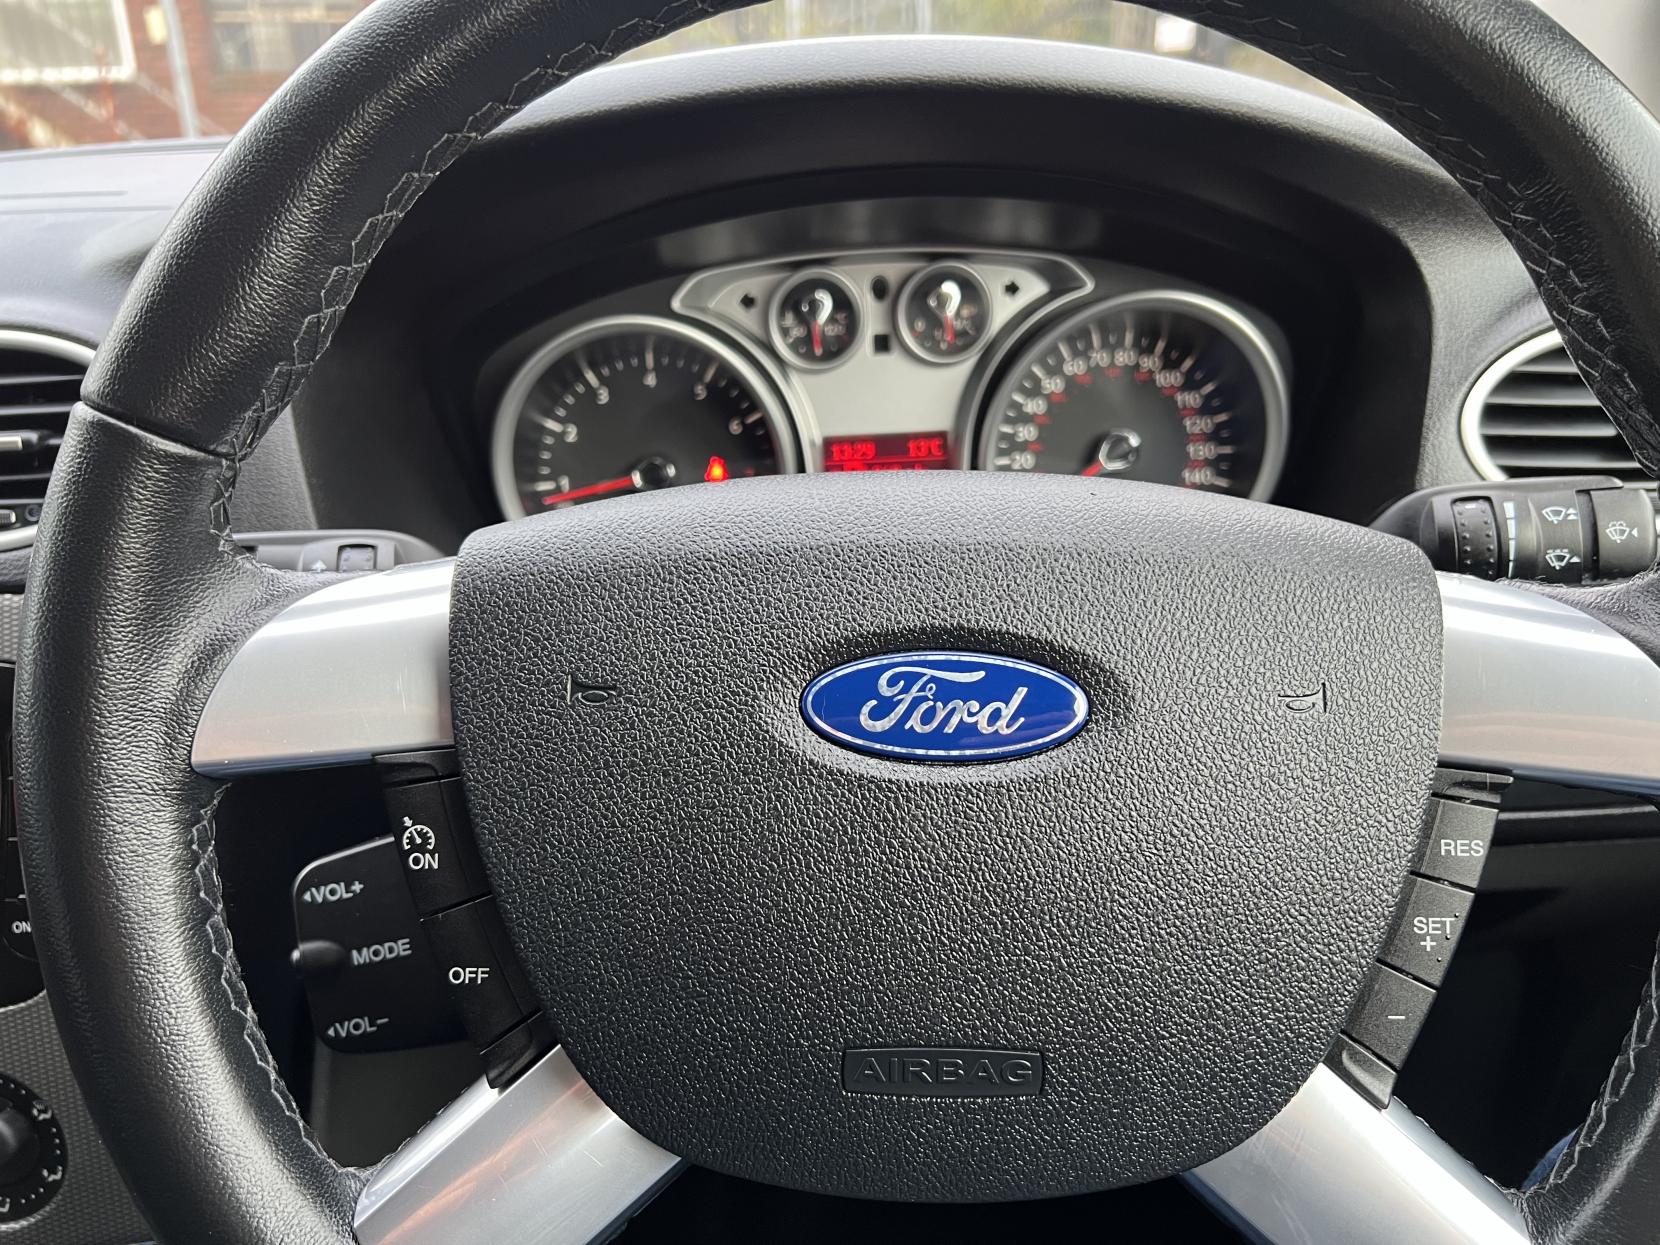 Ford Focus 1.6 Titanium Hatchback 5dr Petrol Manual (159 g/km, 99 bhp)